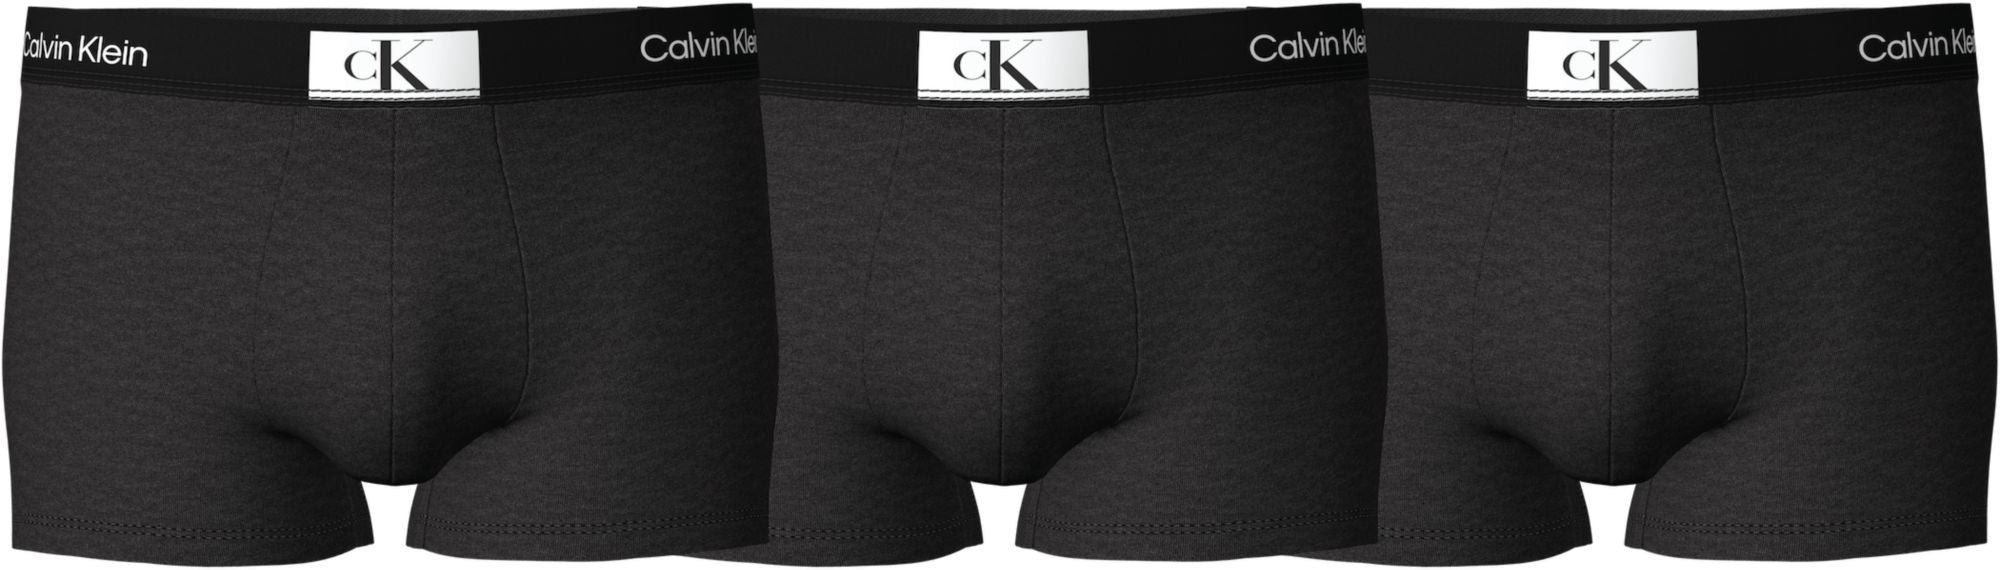 Calvin Klein 3pk Trunk Black/Black/Black